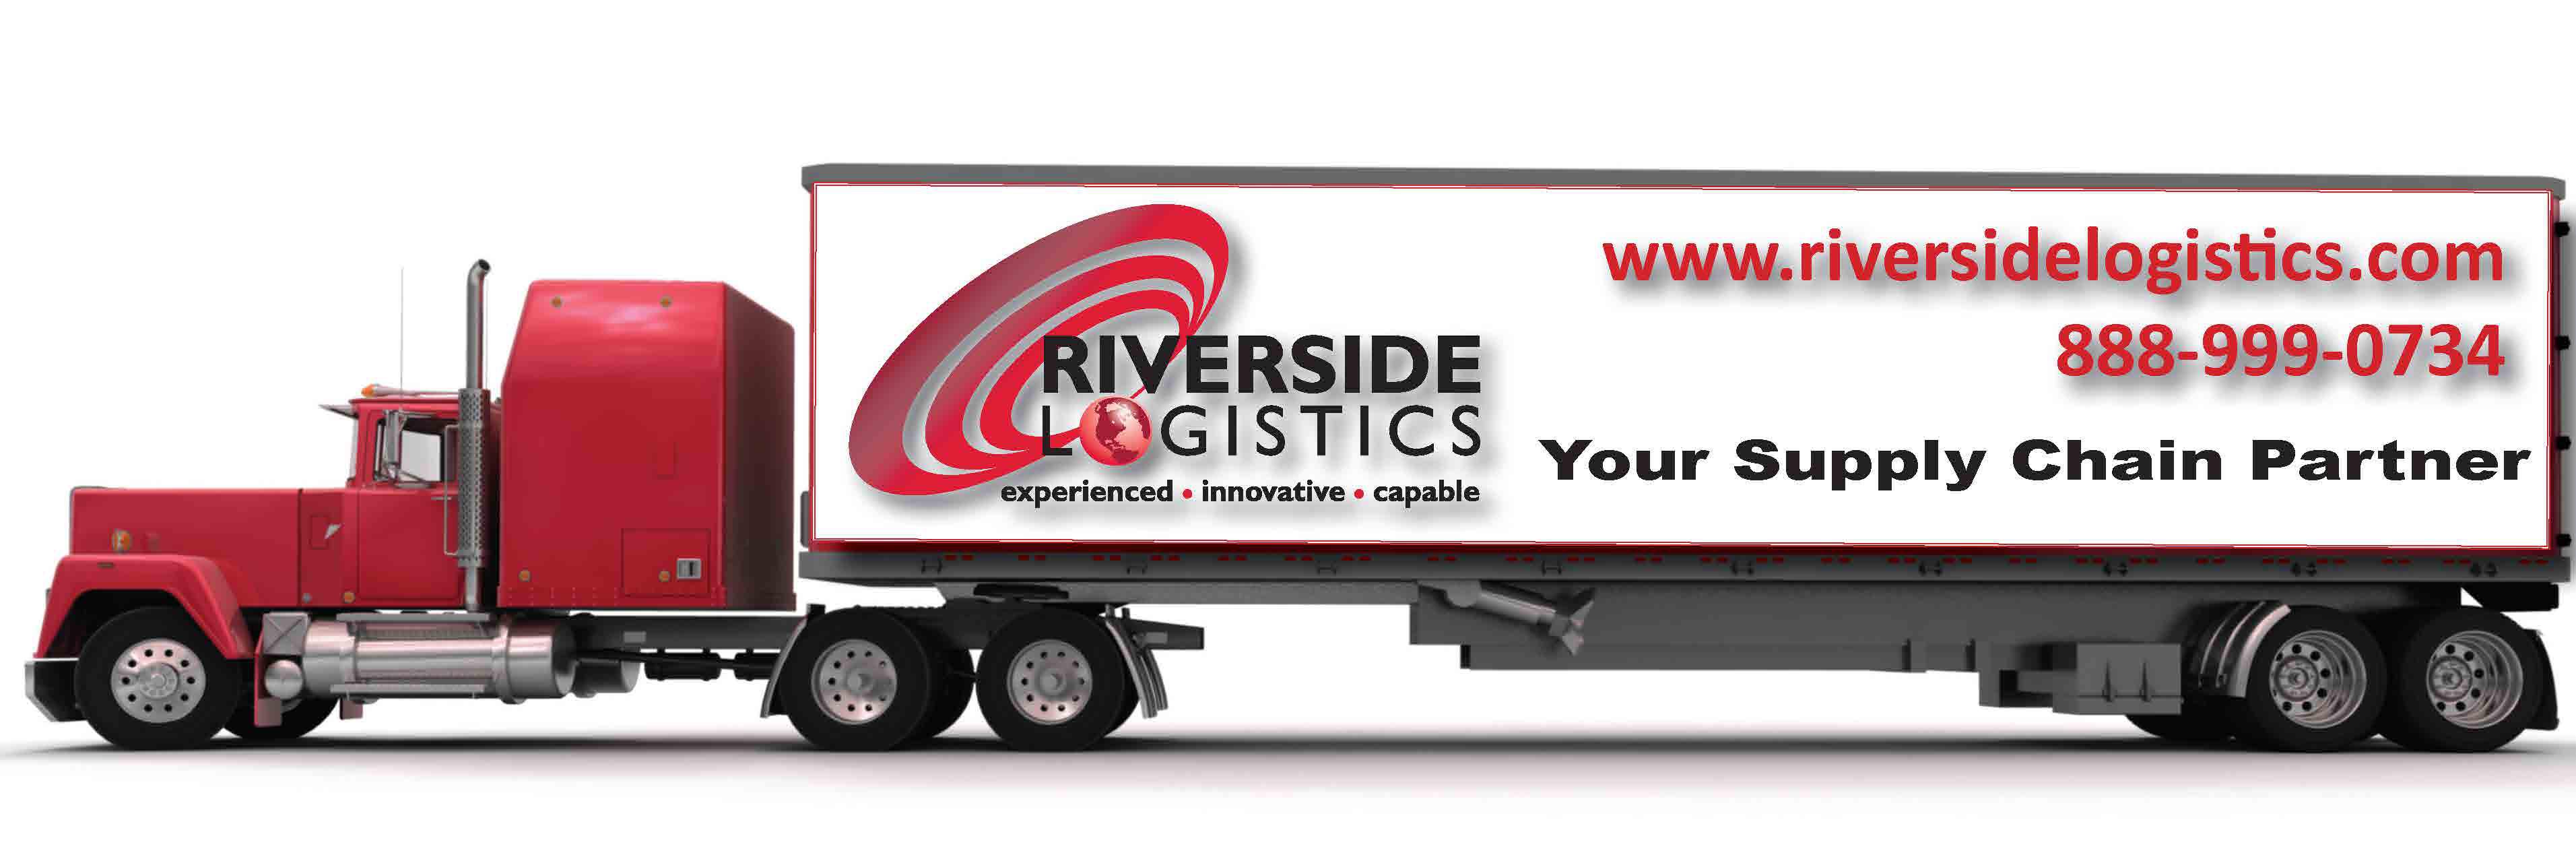 Riverside Logistics Photo